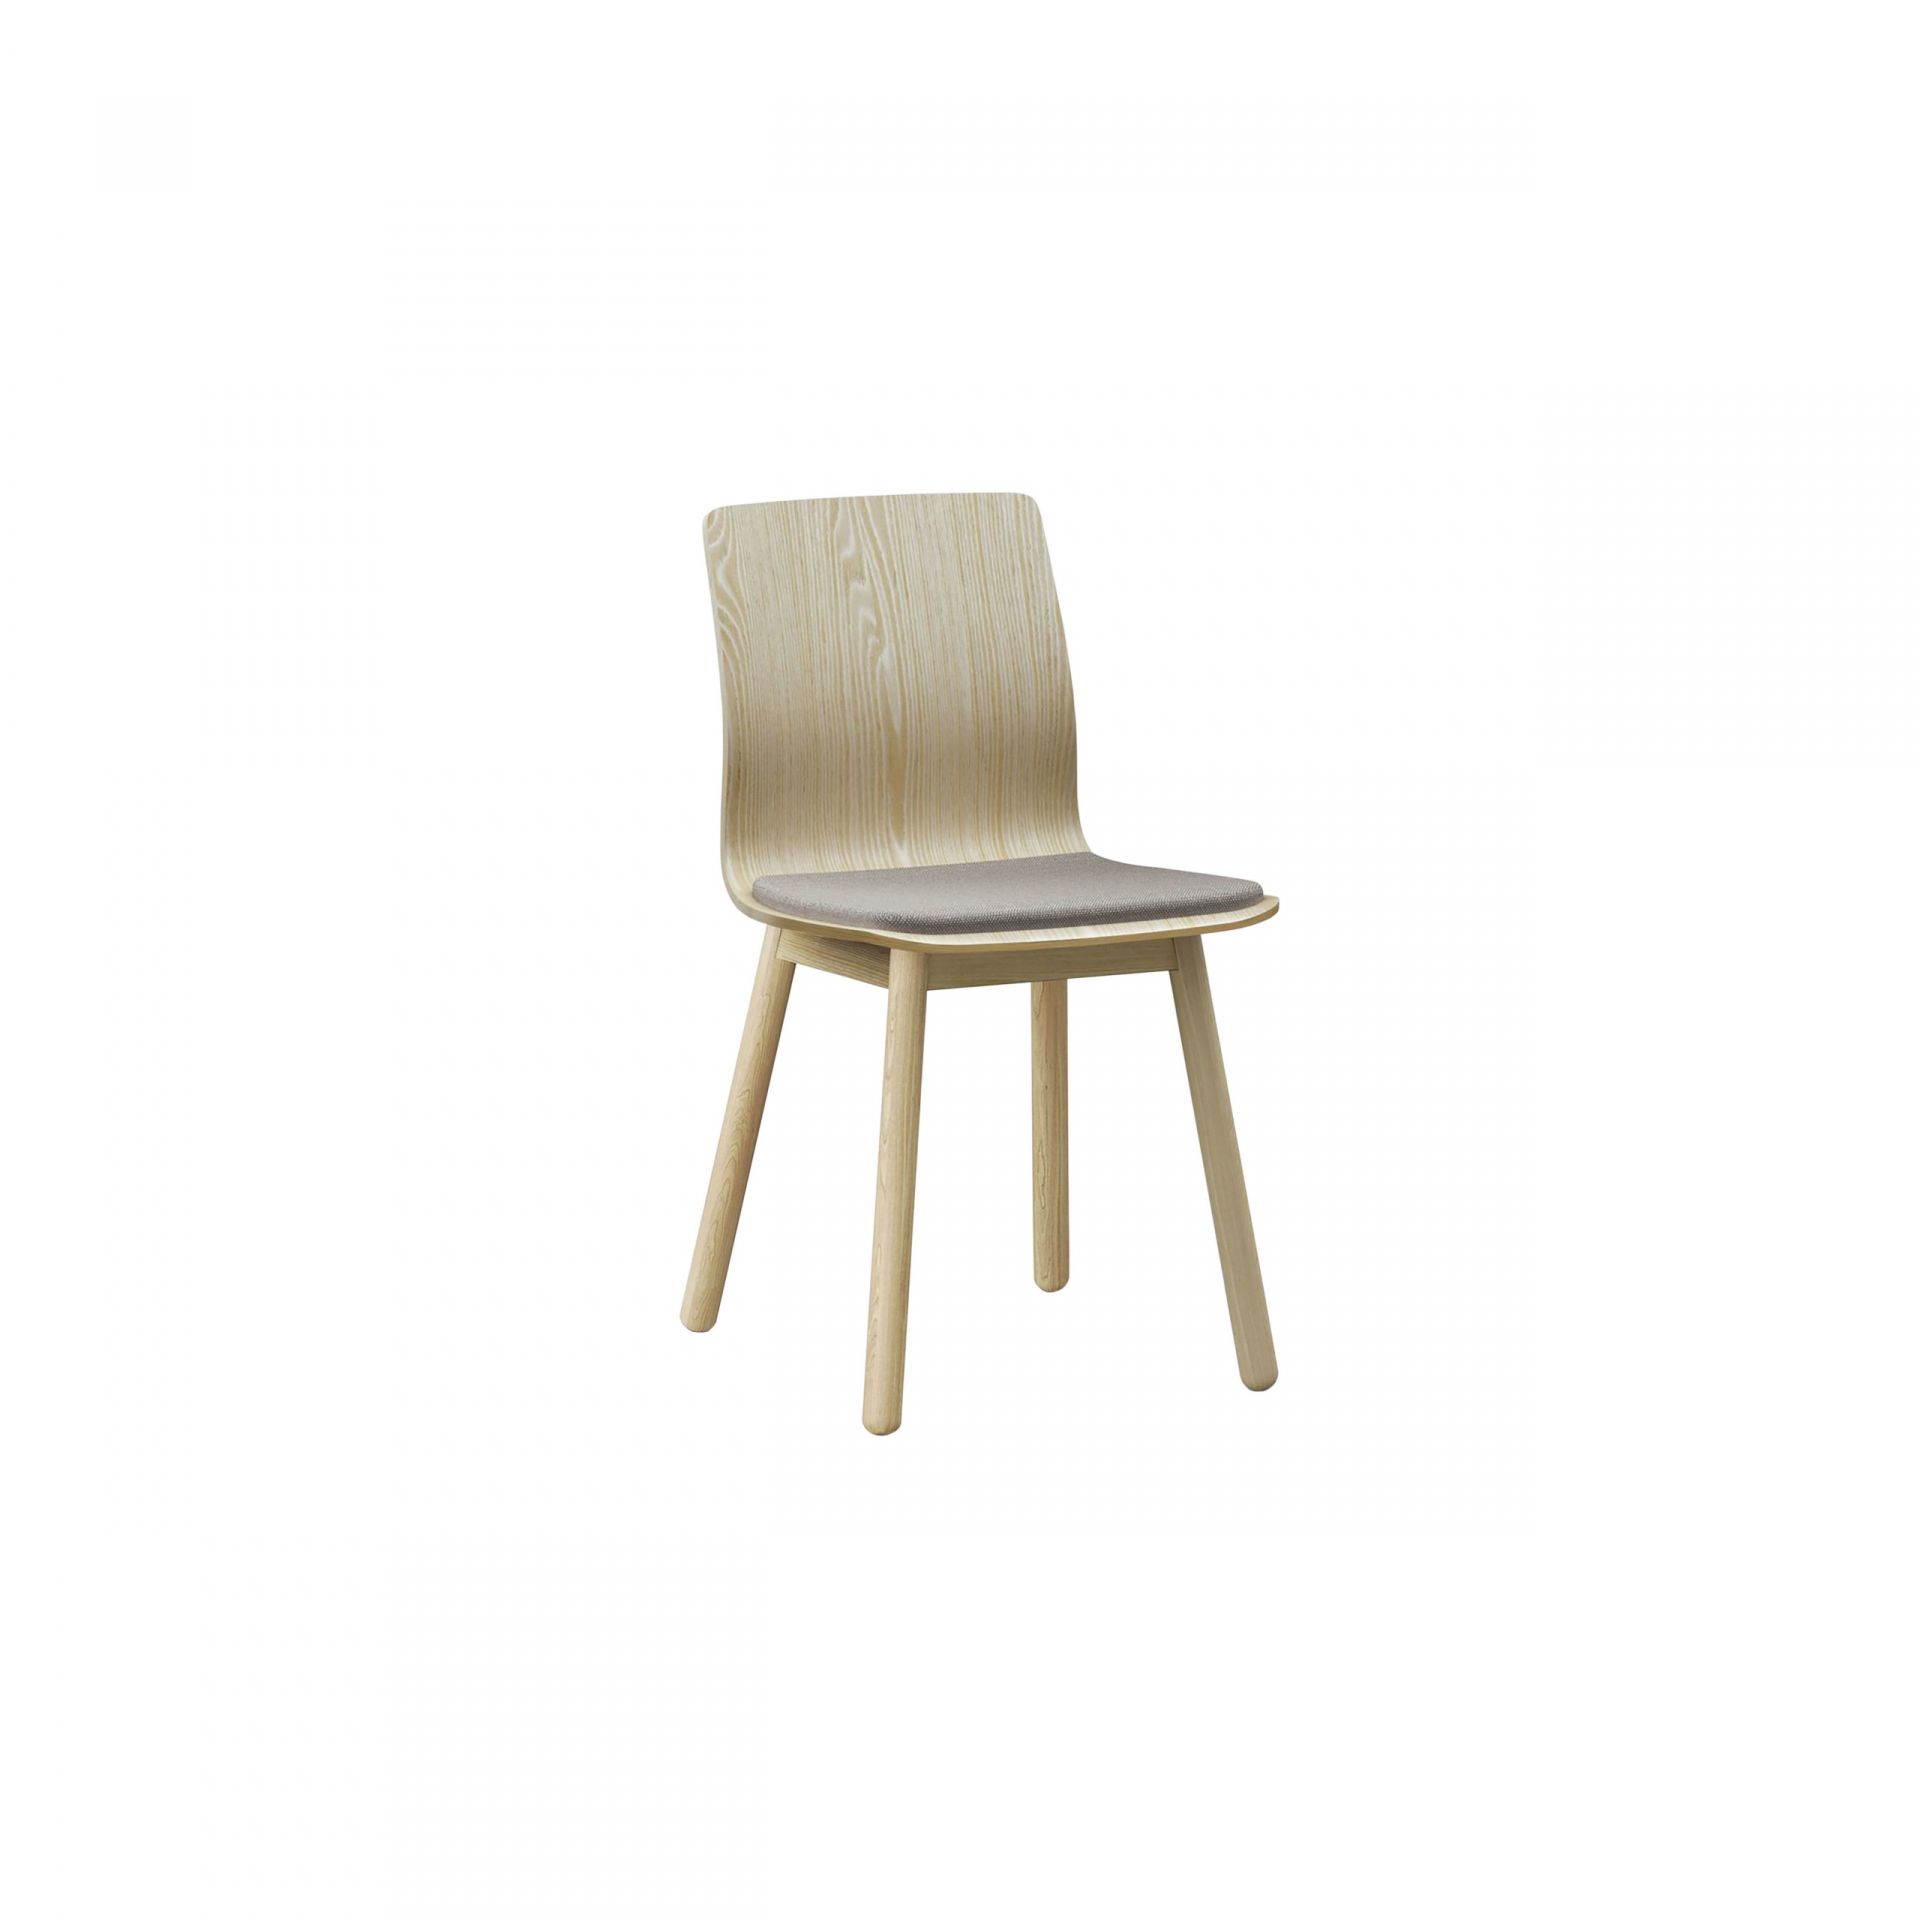 Nova Chair with wooden legs